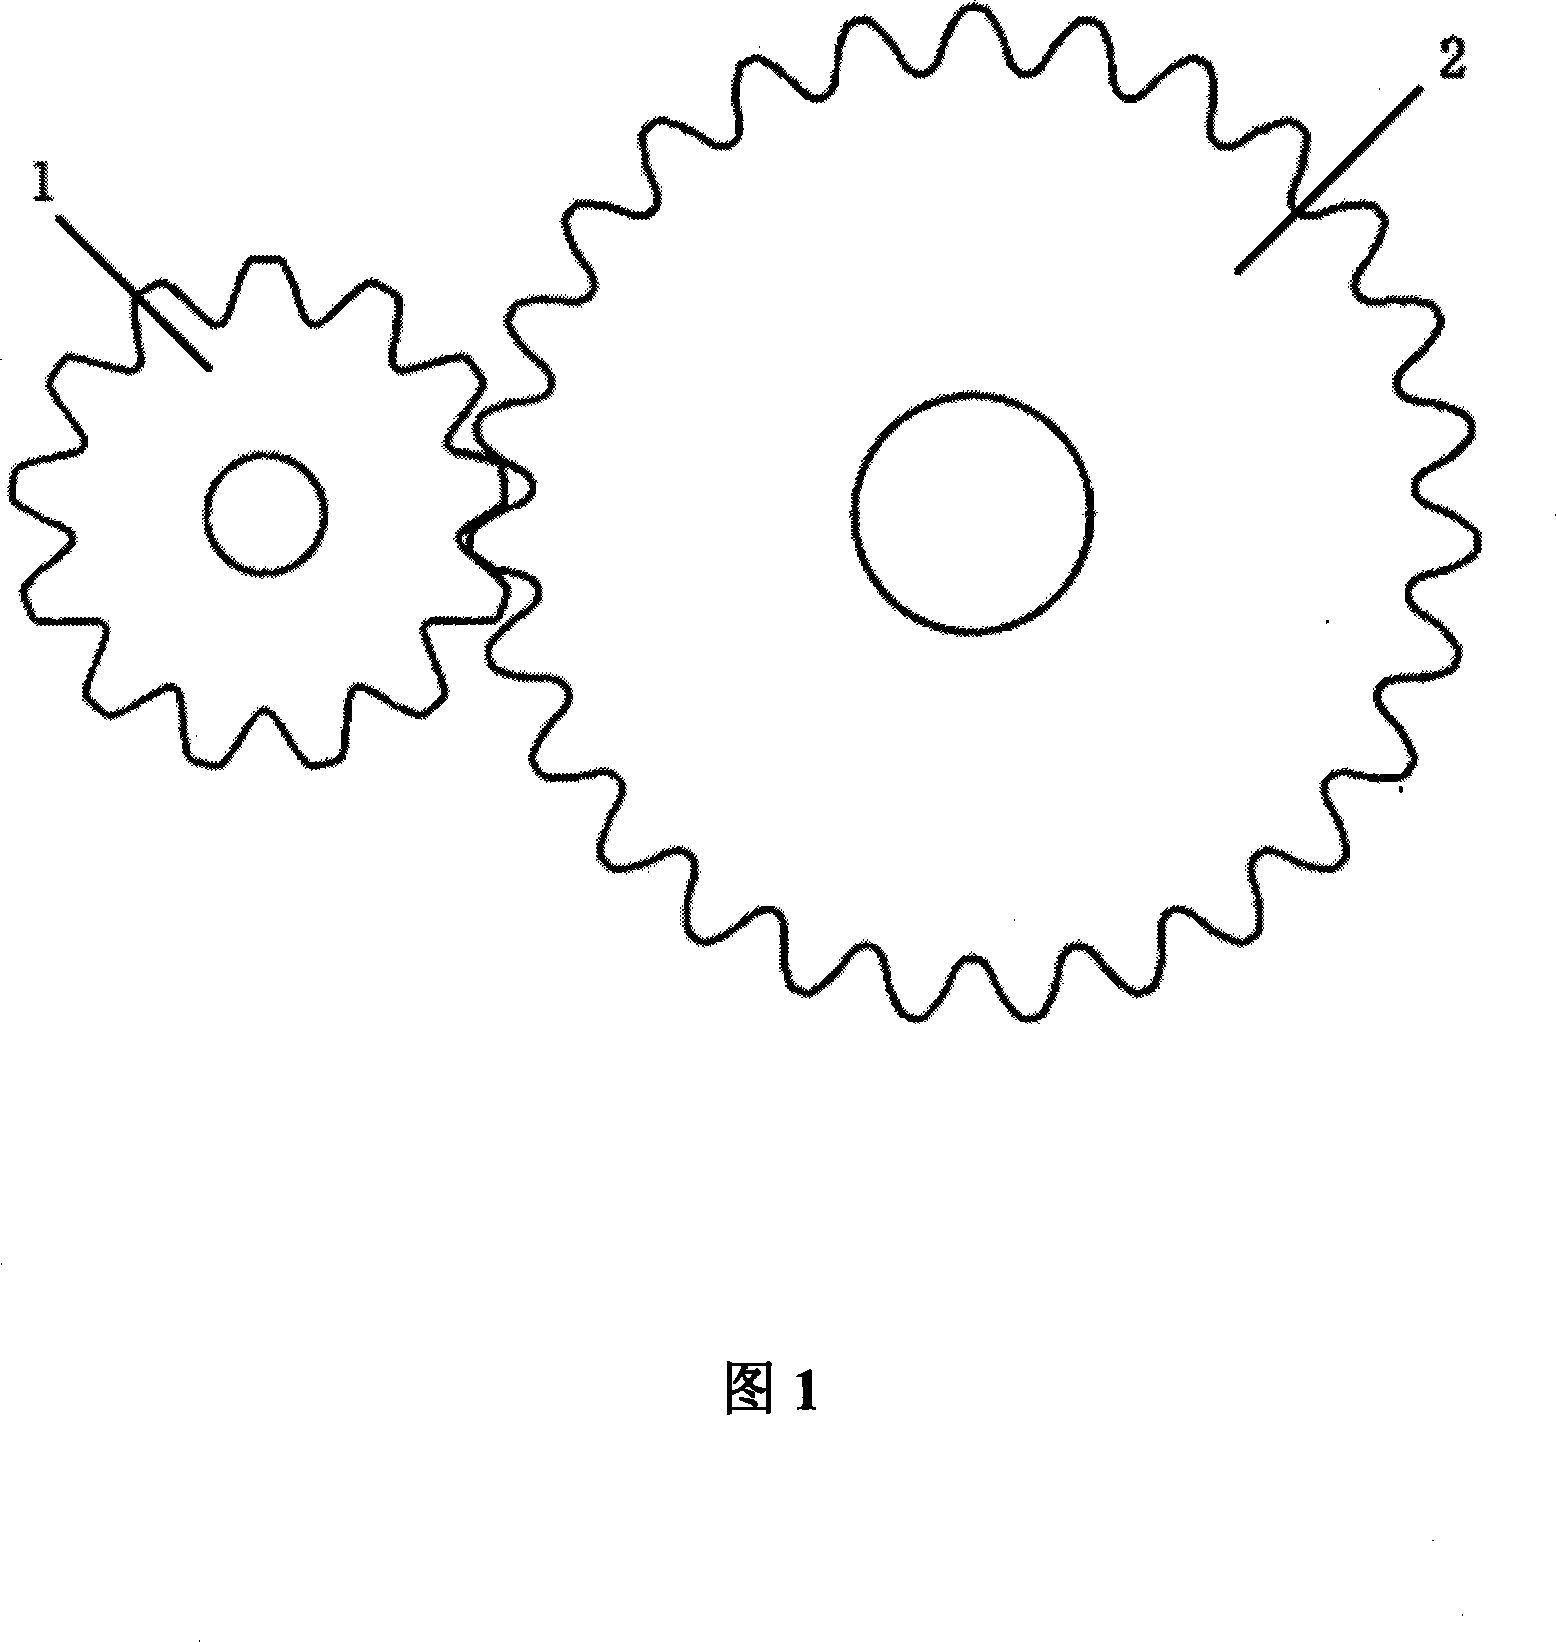 Cosine gear transmission mechanism